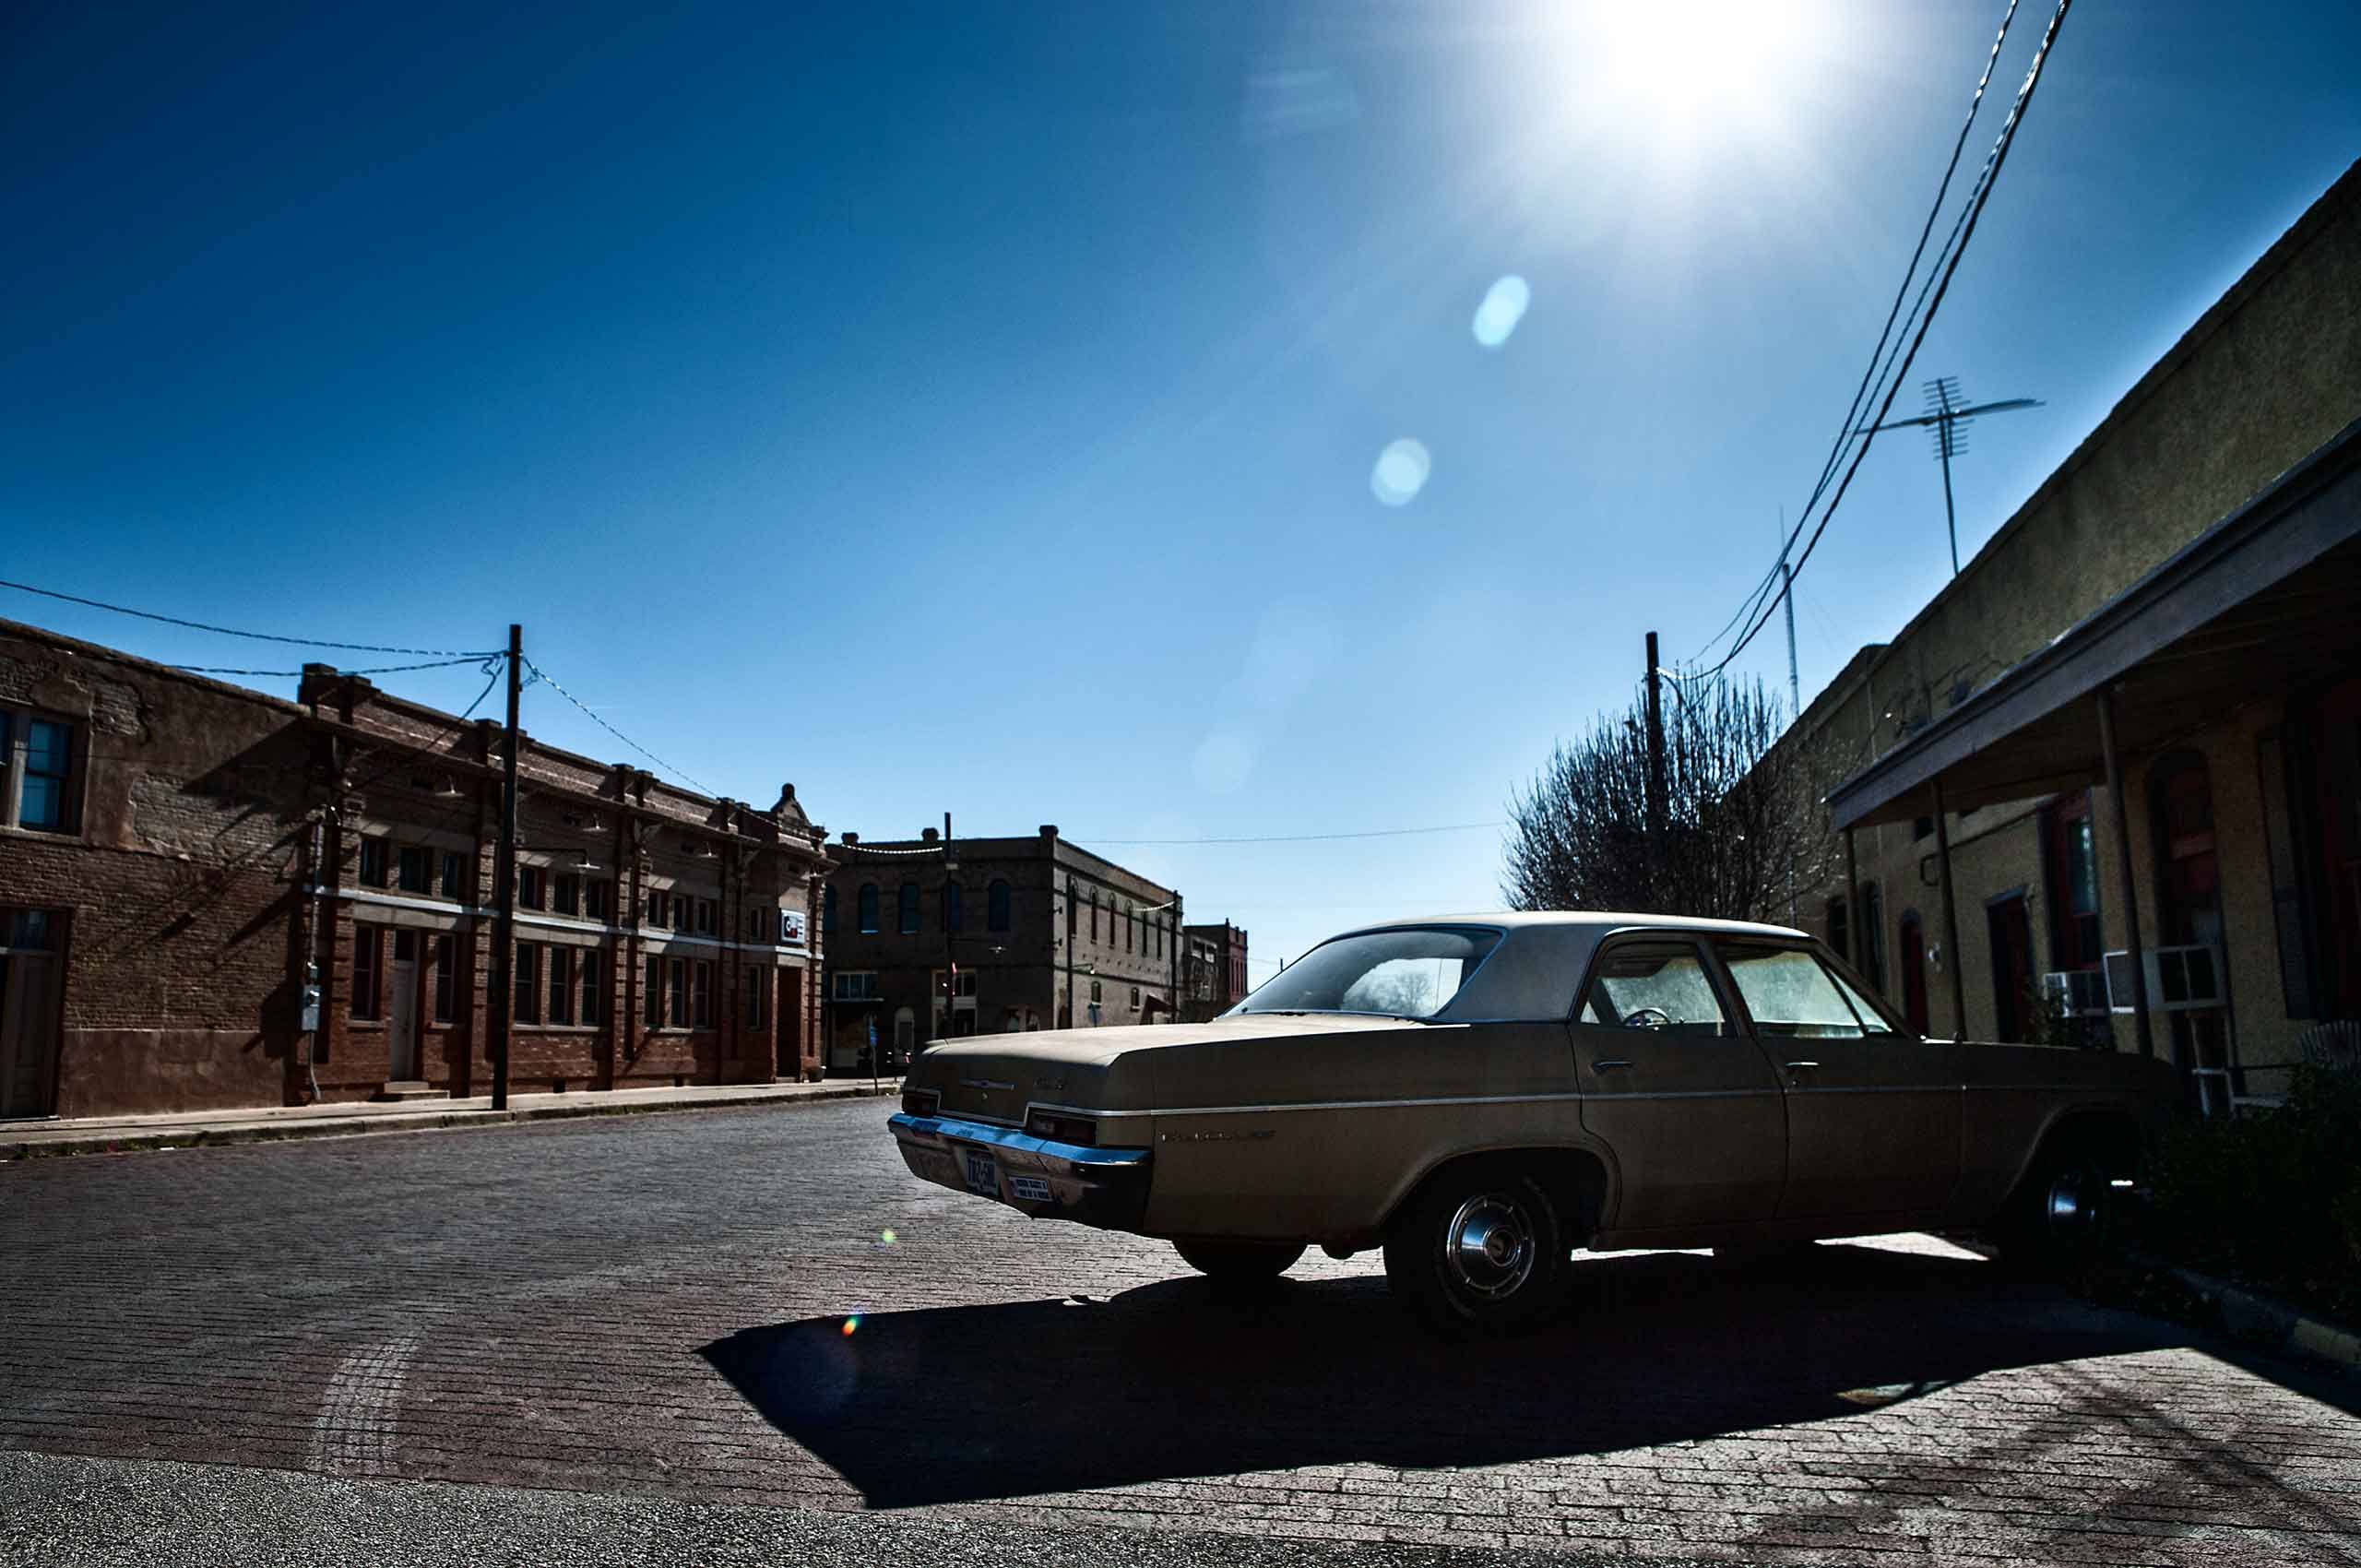 vintage-car-on-street-bartlett-texas-by-HenrikOlundPhotography.jpg